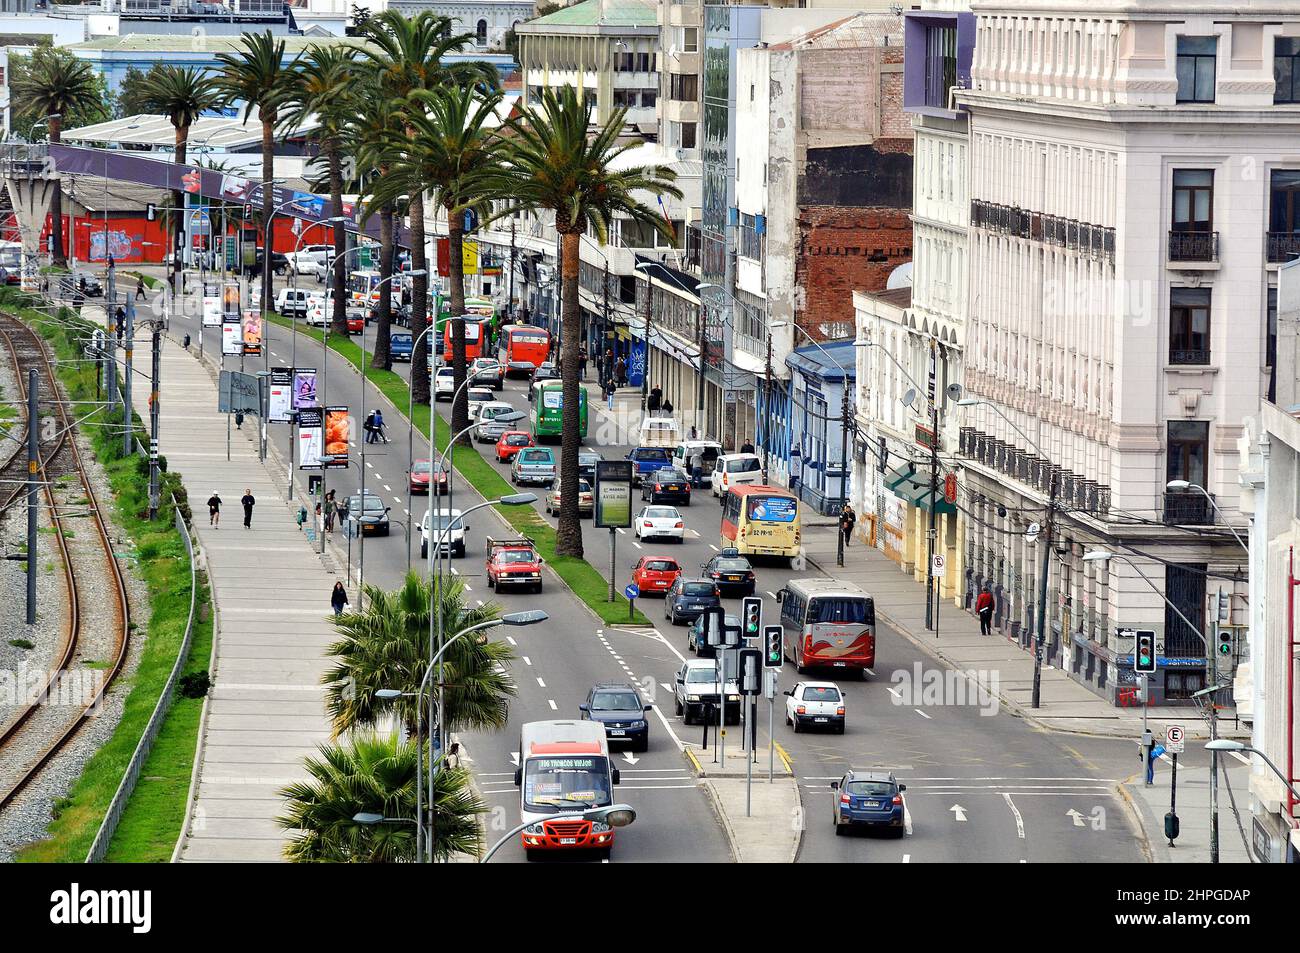 street scene, aerial view, Valparaiso, Chile Stock Photo